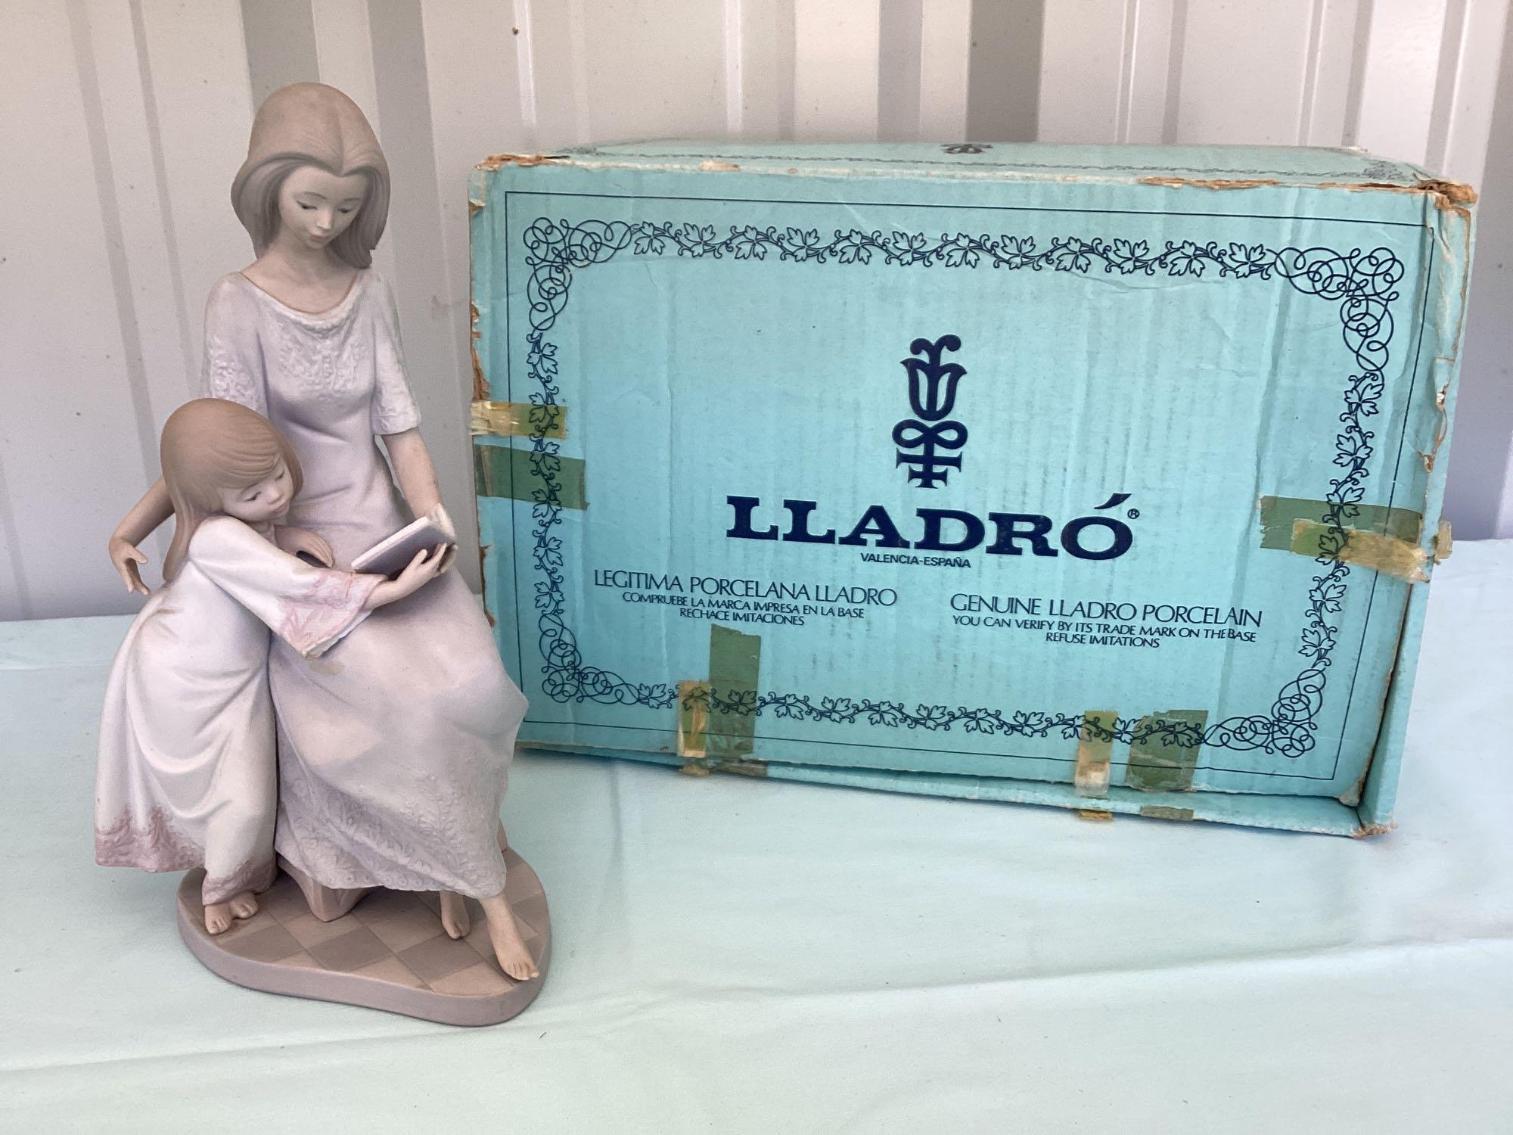 Image for Lladro Figurine